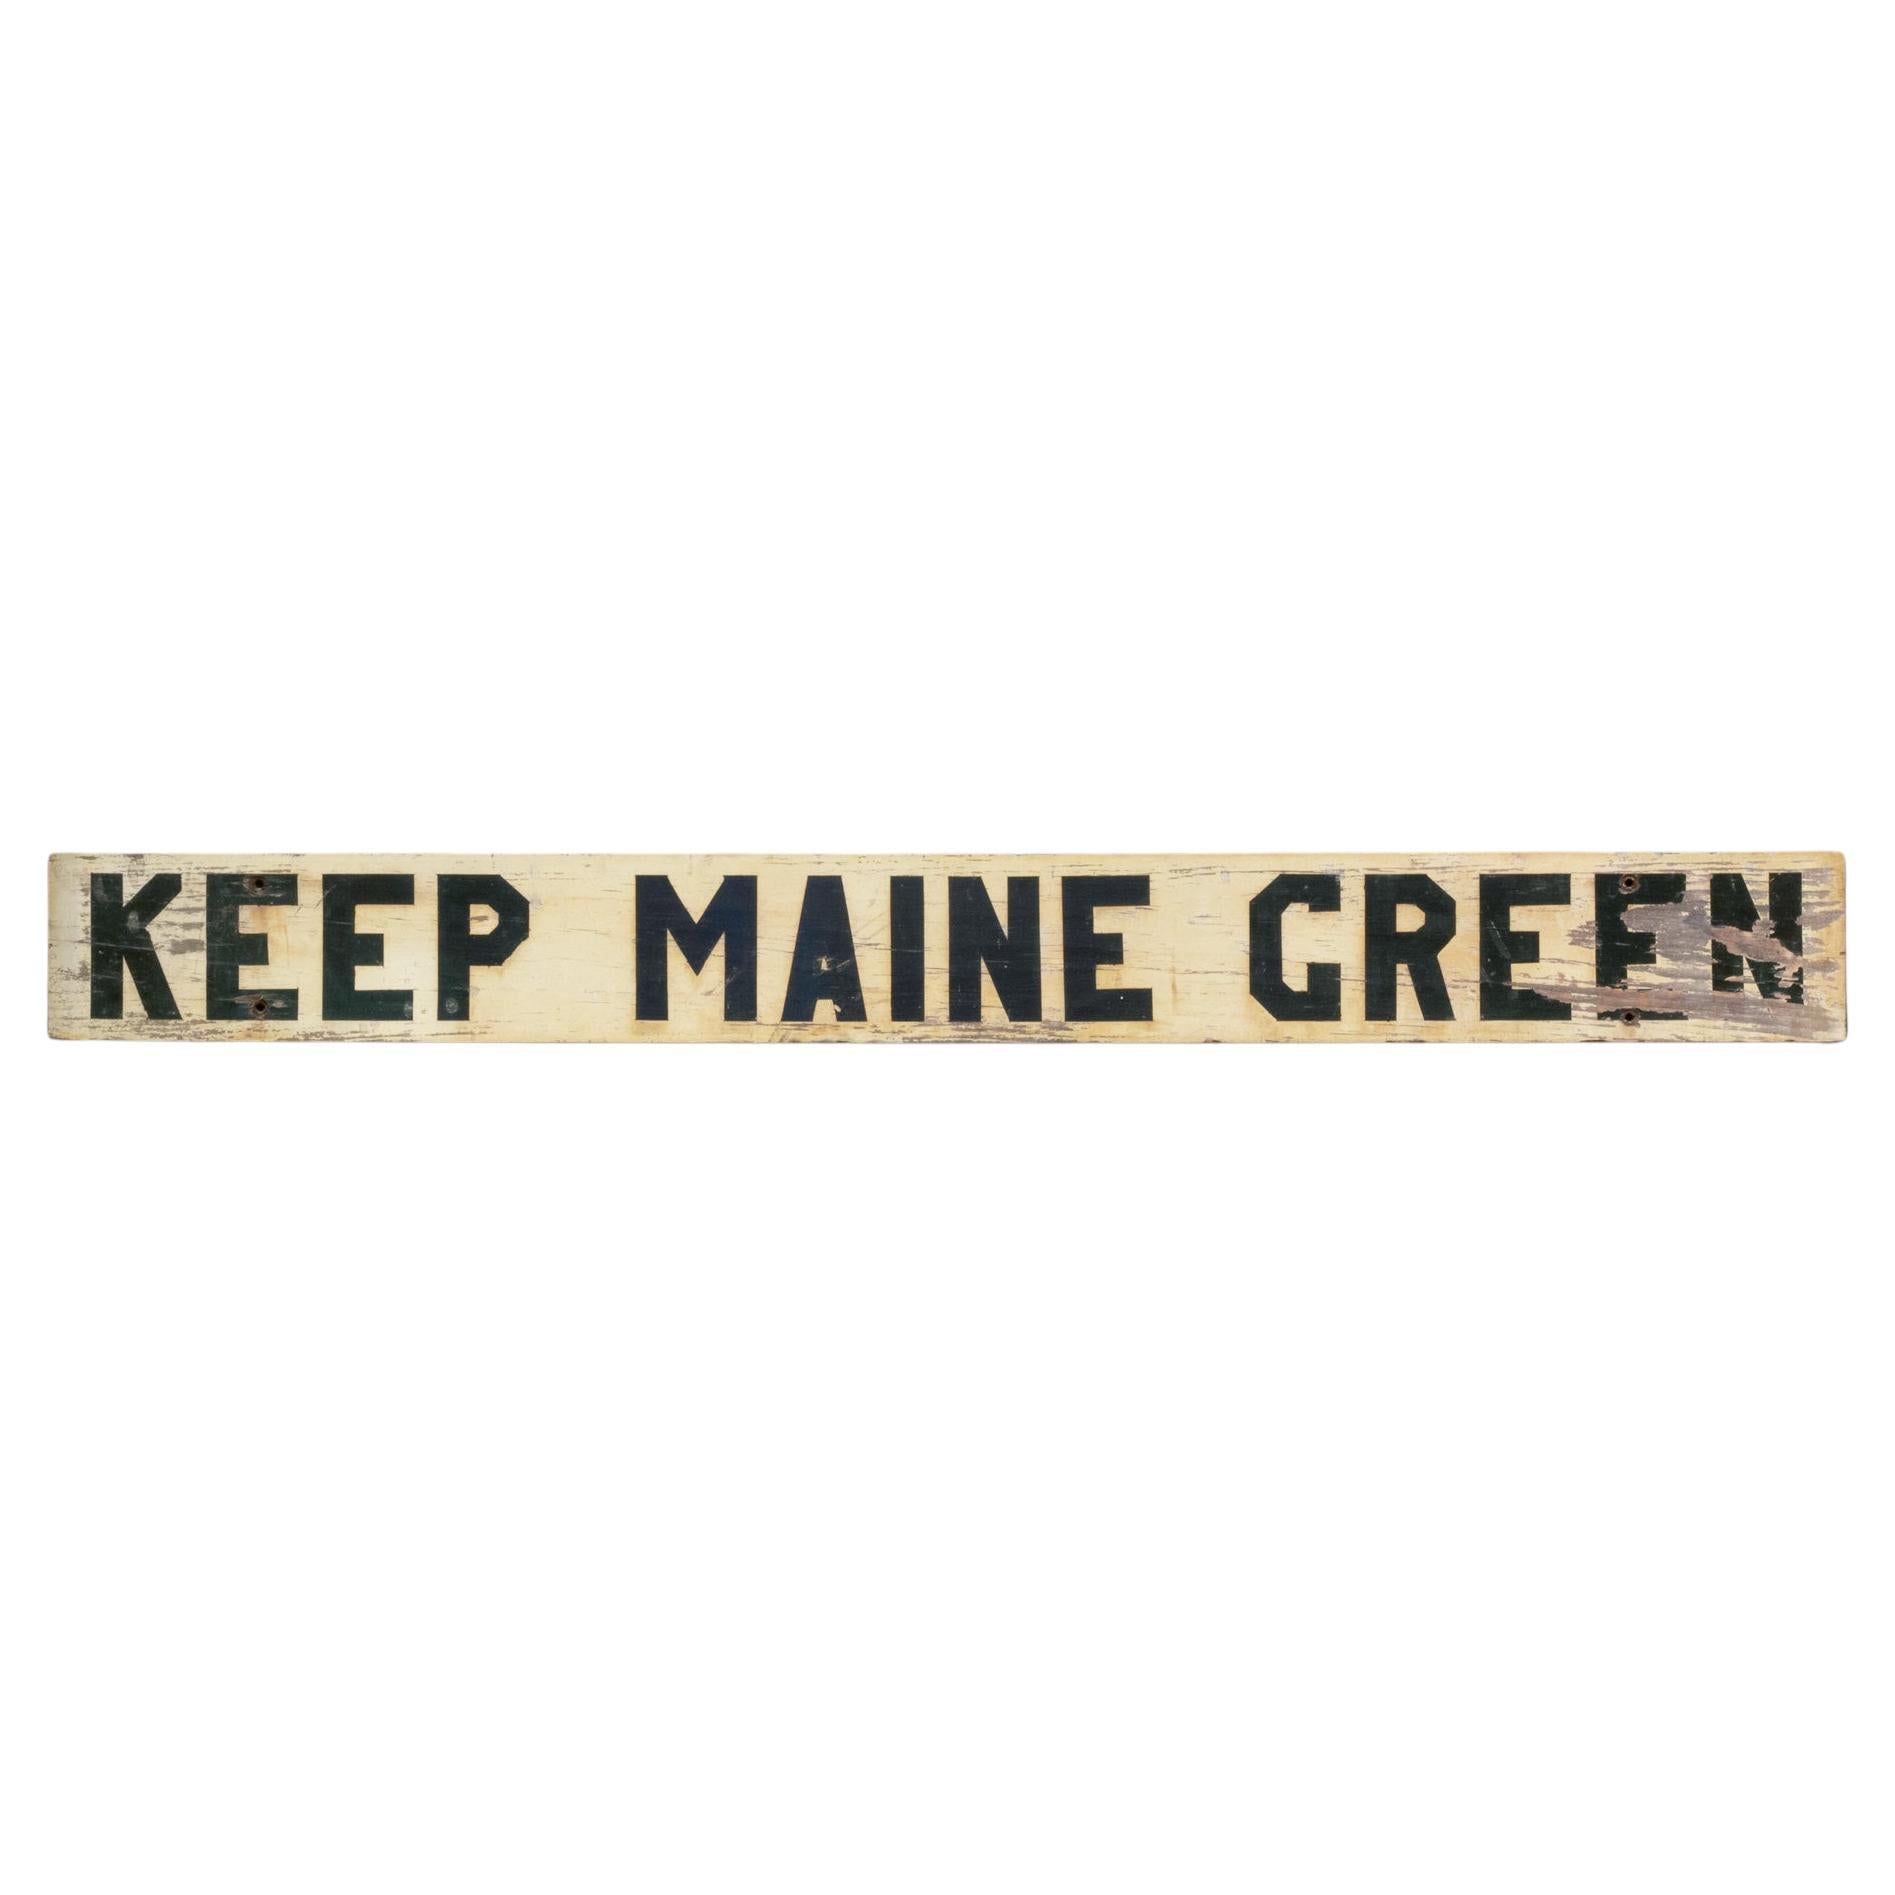 Grande enseigne ancienne en bois "Keep Maine Green" des années 1940-1950